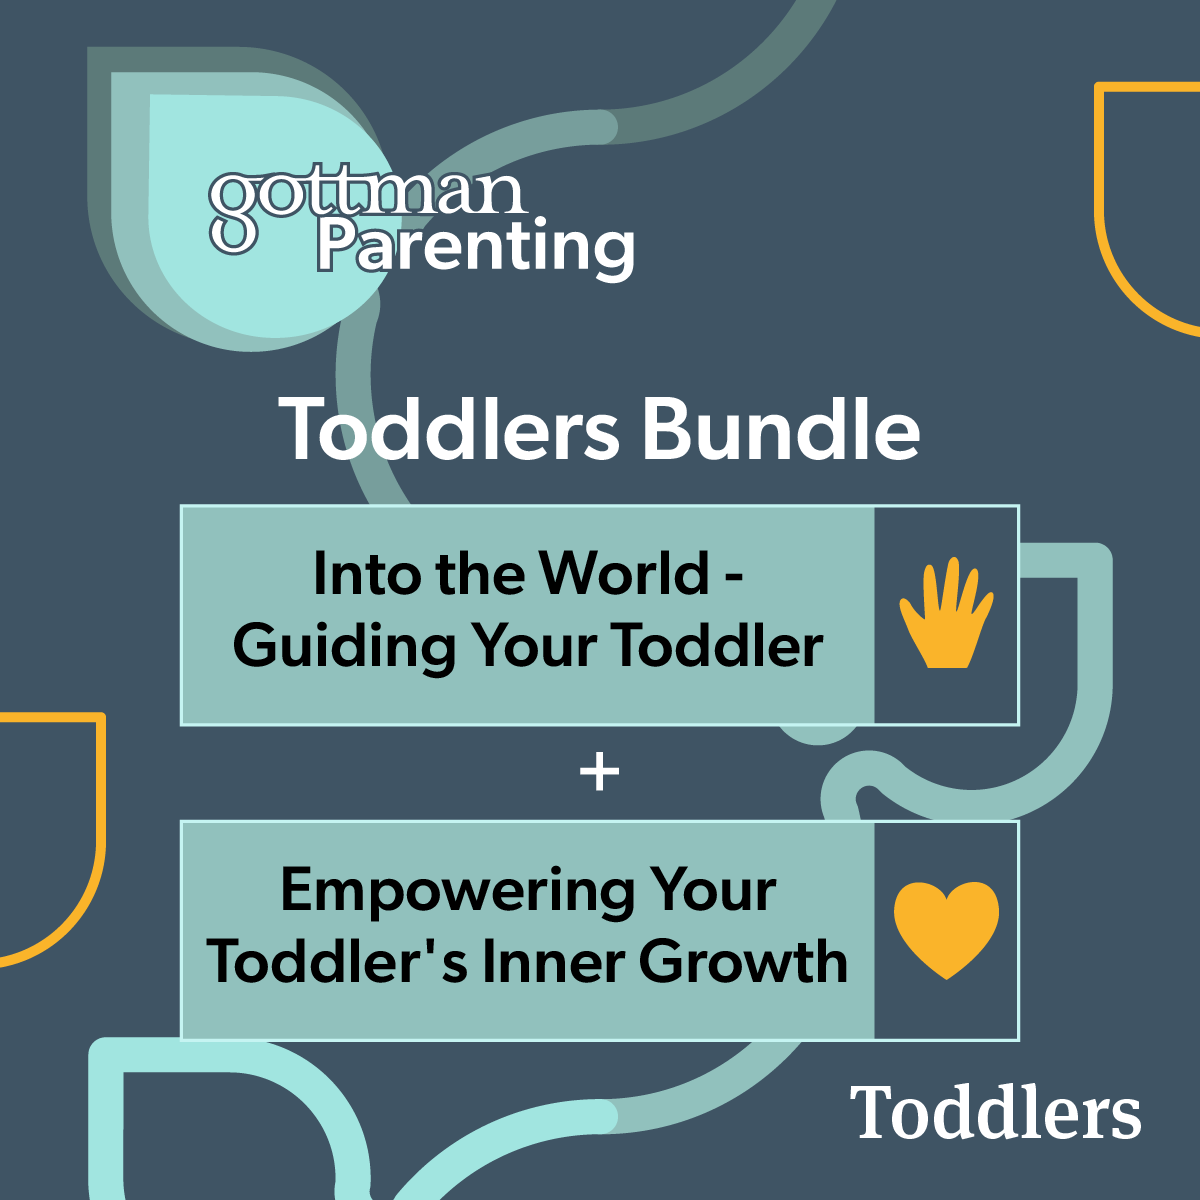 Gottman parenting-Toddlers bundle graphic